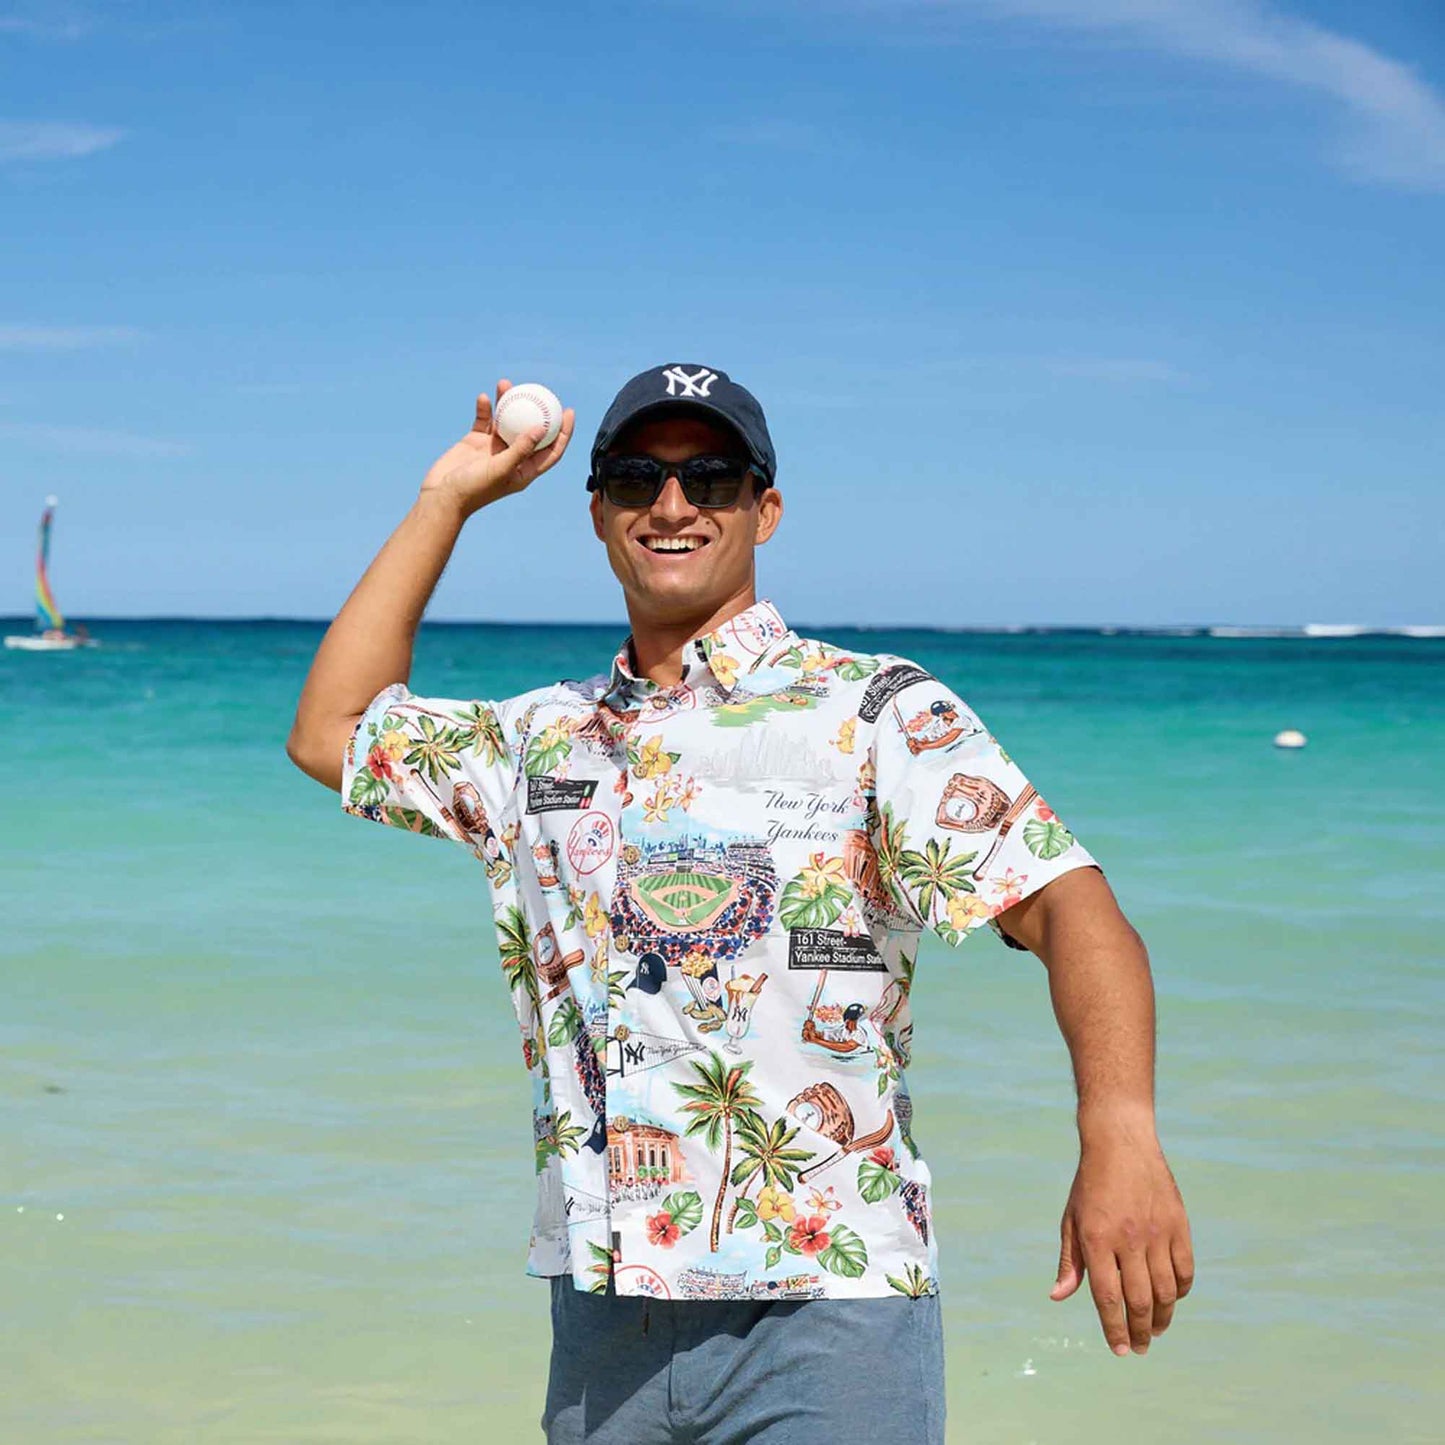 Reyn Spooner Men's New York Yankee Classic Fit Scenic Hawaiian Shirt, Style#5525